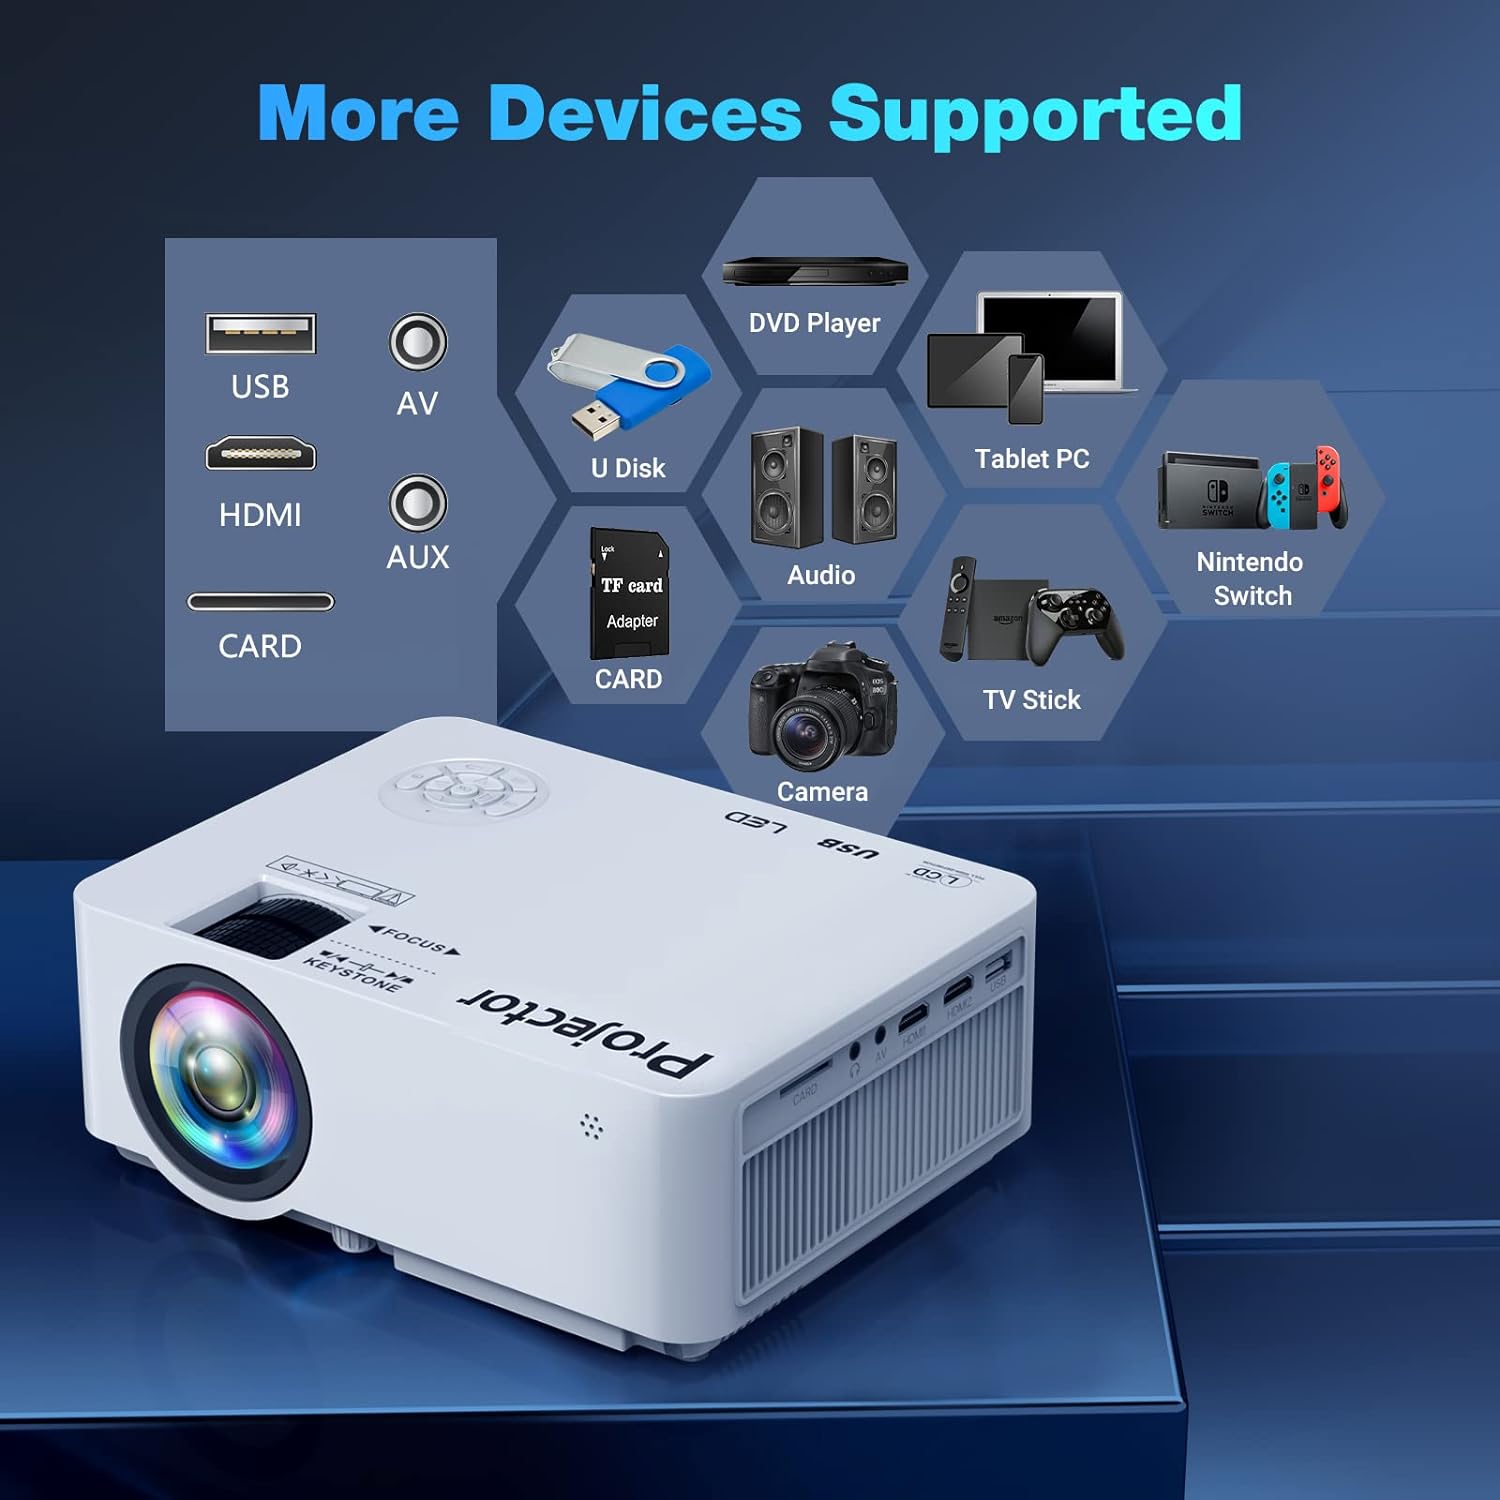 Proyector 4K proyector Bluetooth 5G WIFI con pantalla máxima de